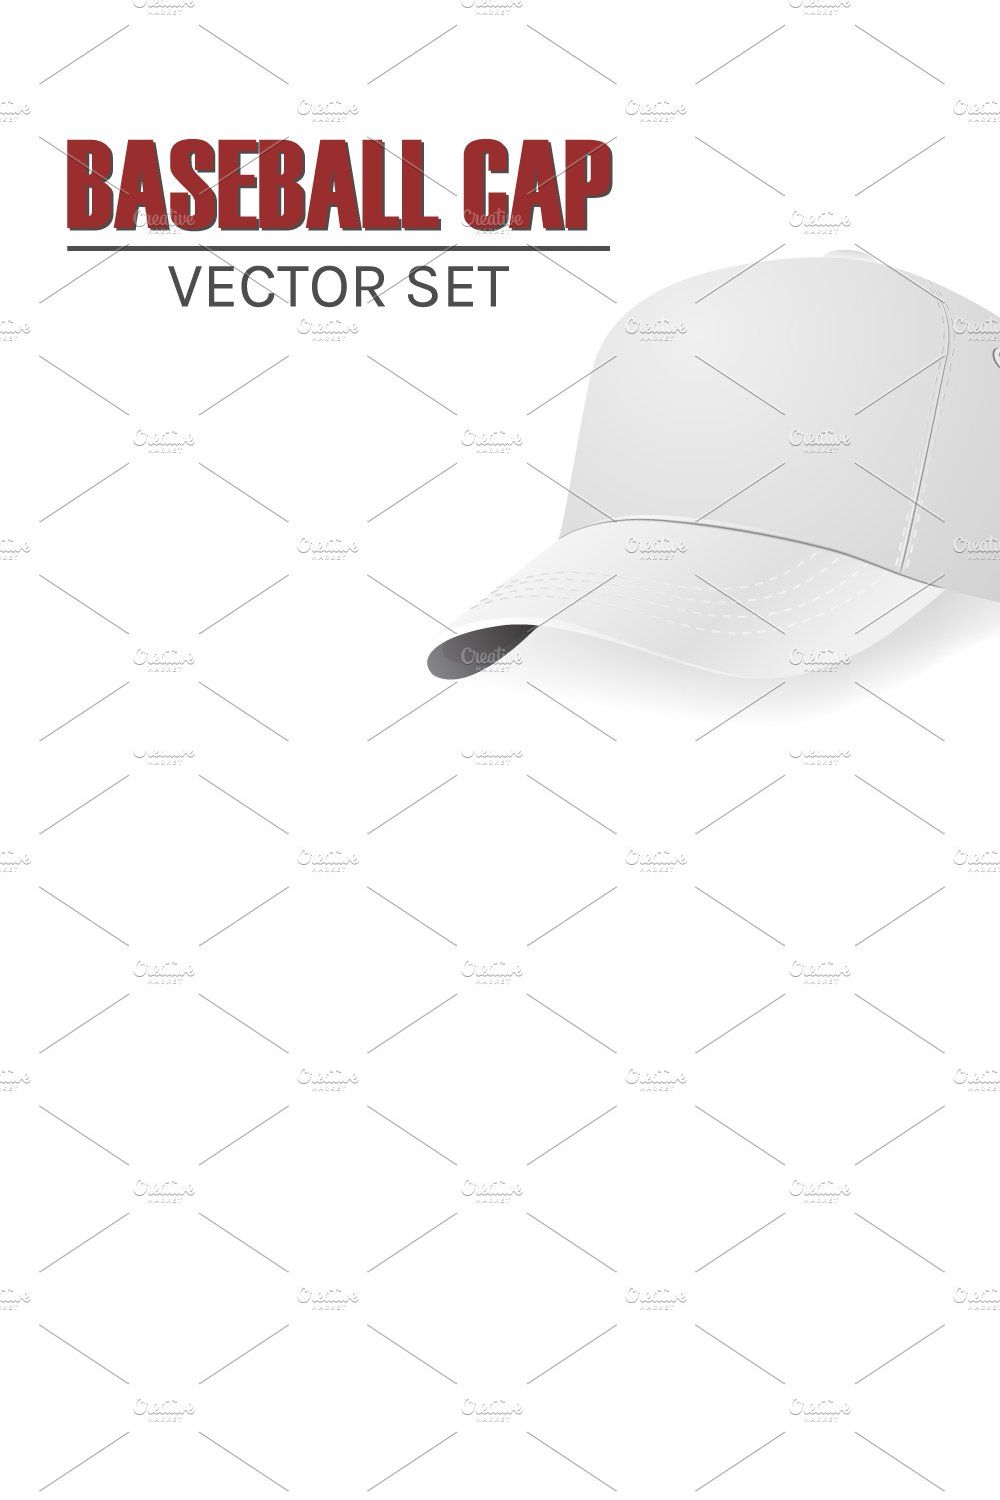 Baseball cap. Vector set. pinterest preview image.